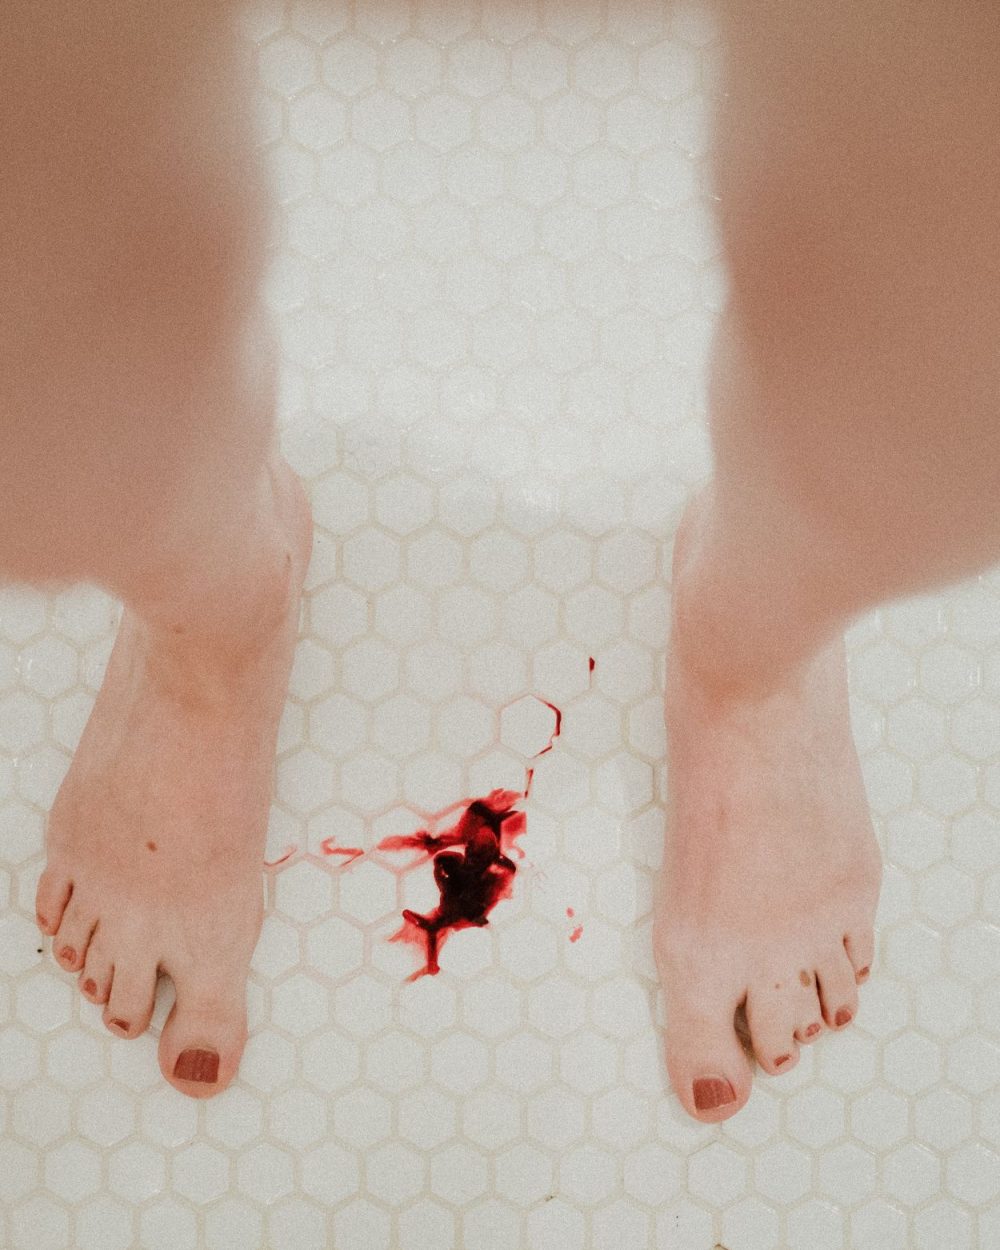 una persona sangrando